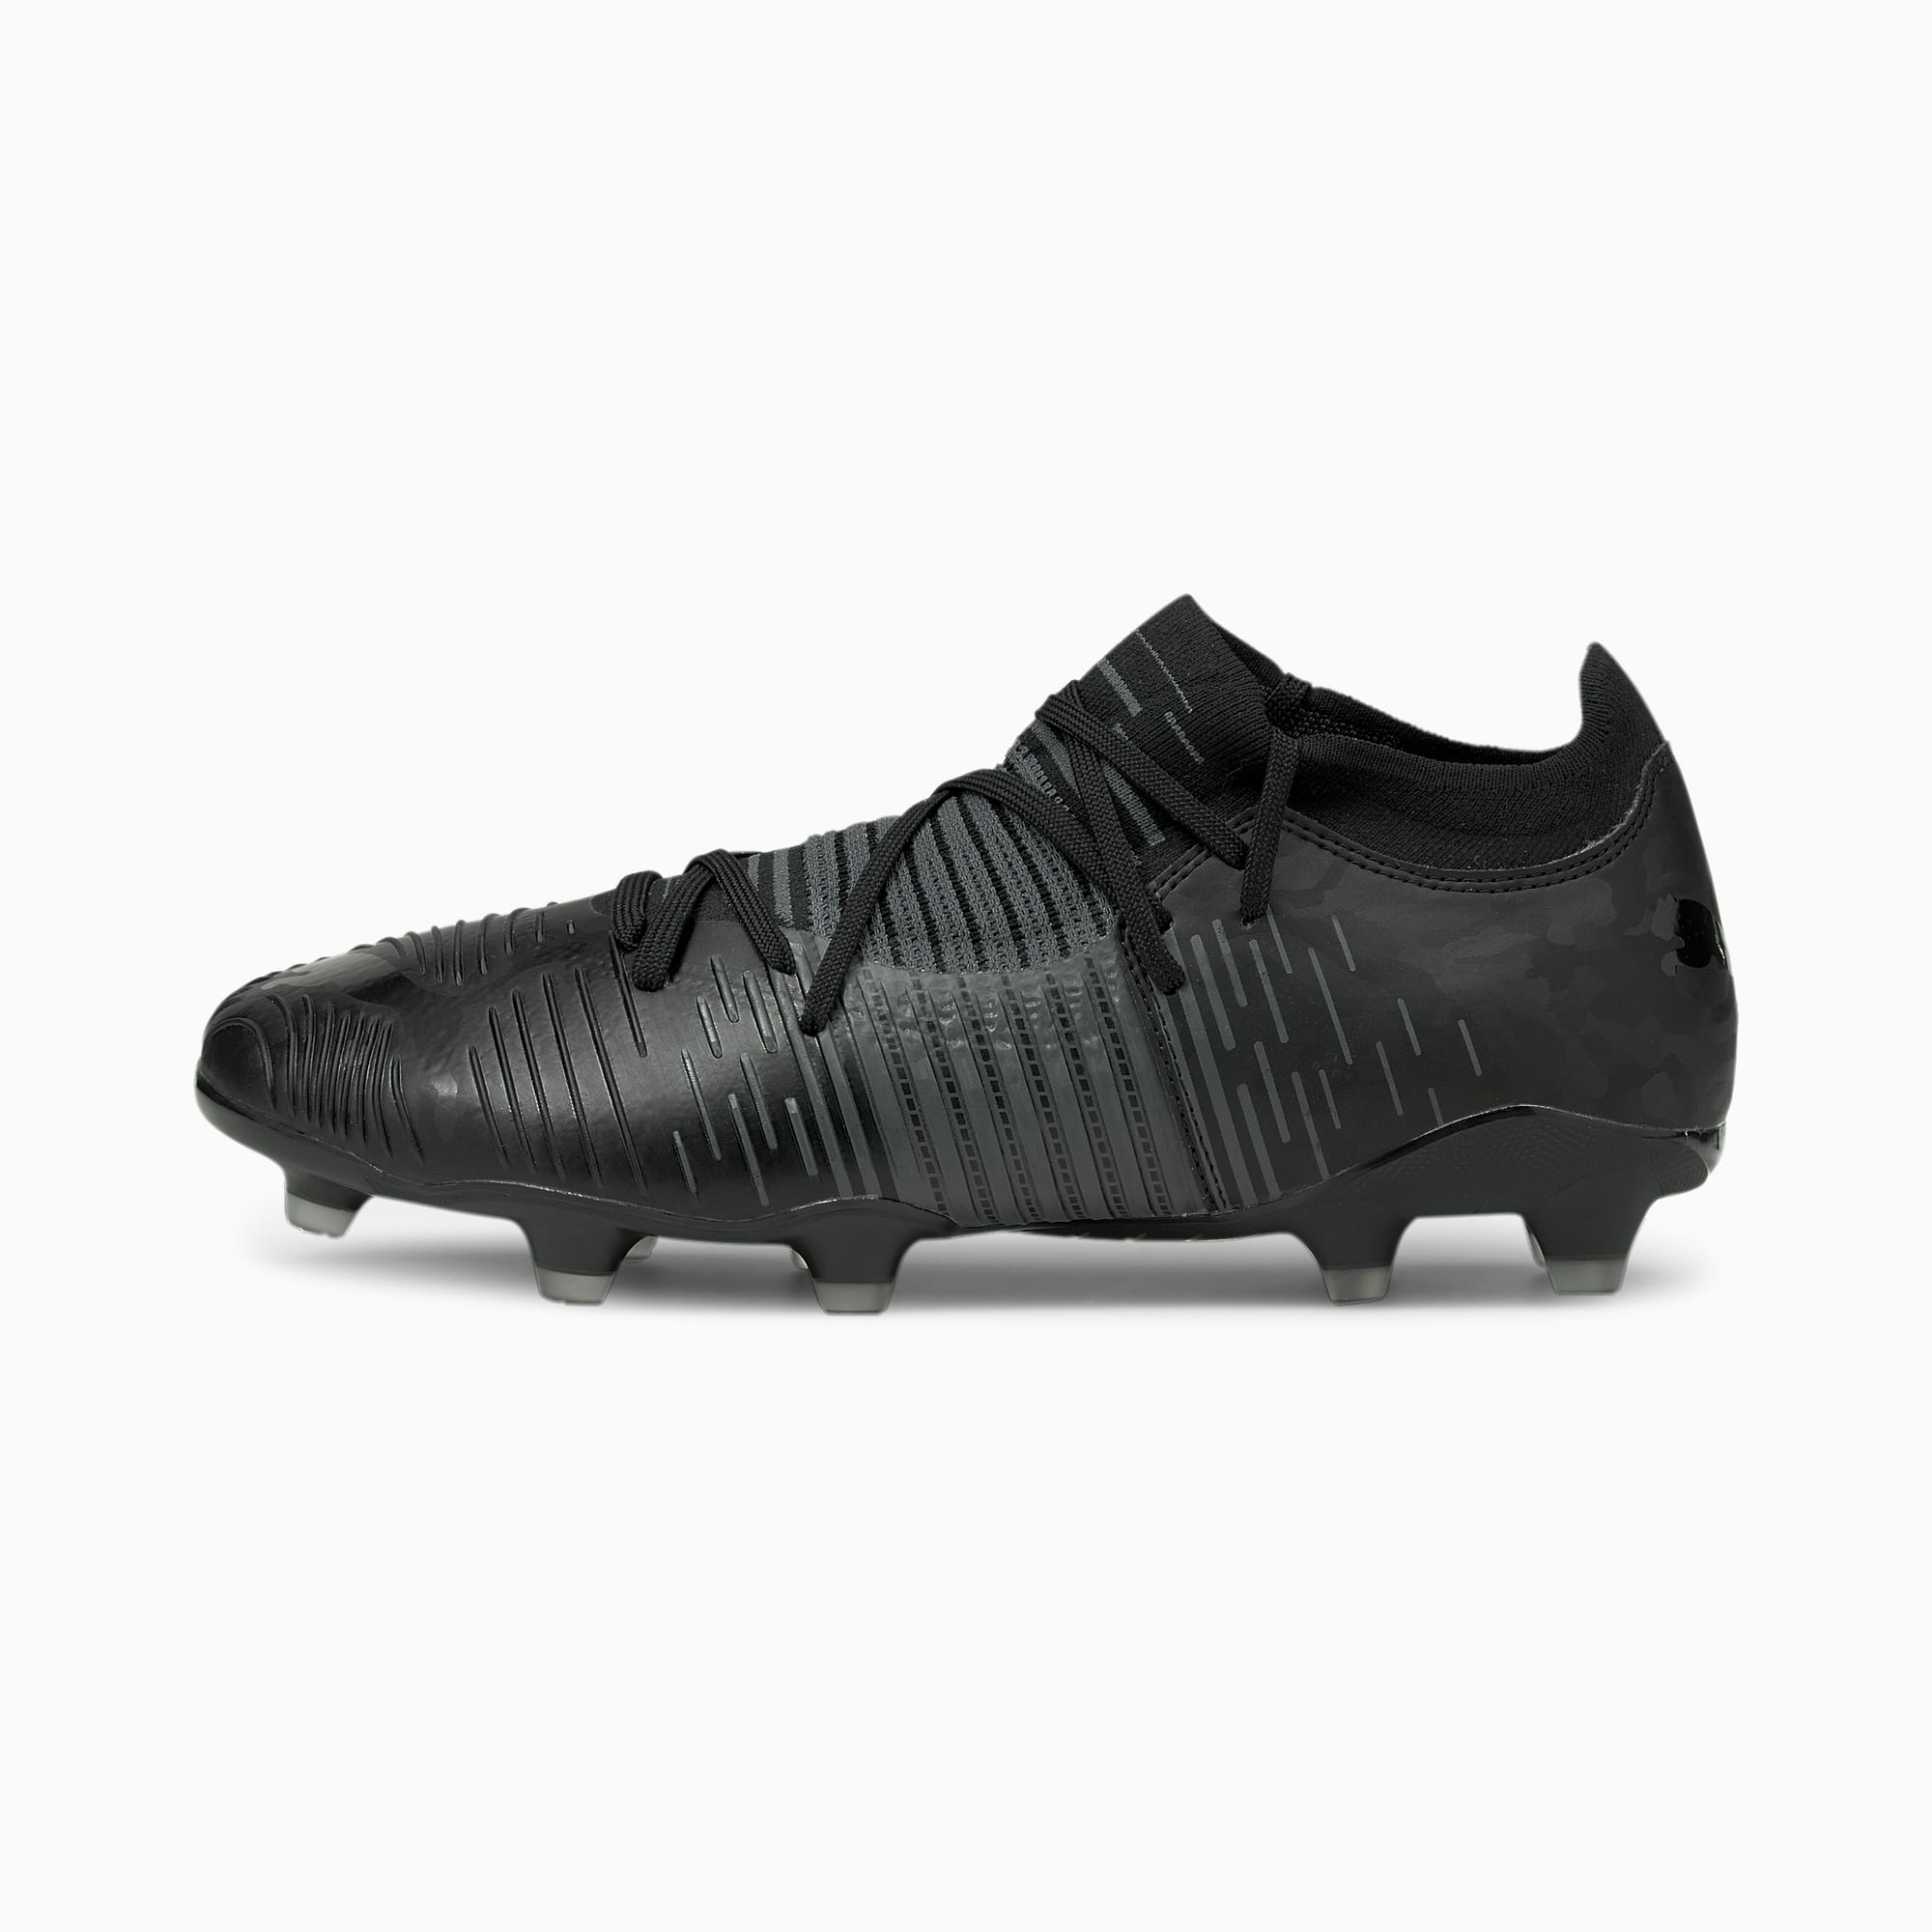 PUMA Chaussures de football FUTURE Z 3.1 FG/AG homme, Noir/Gris, Taille 45, Chaussures